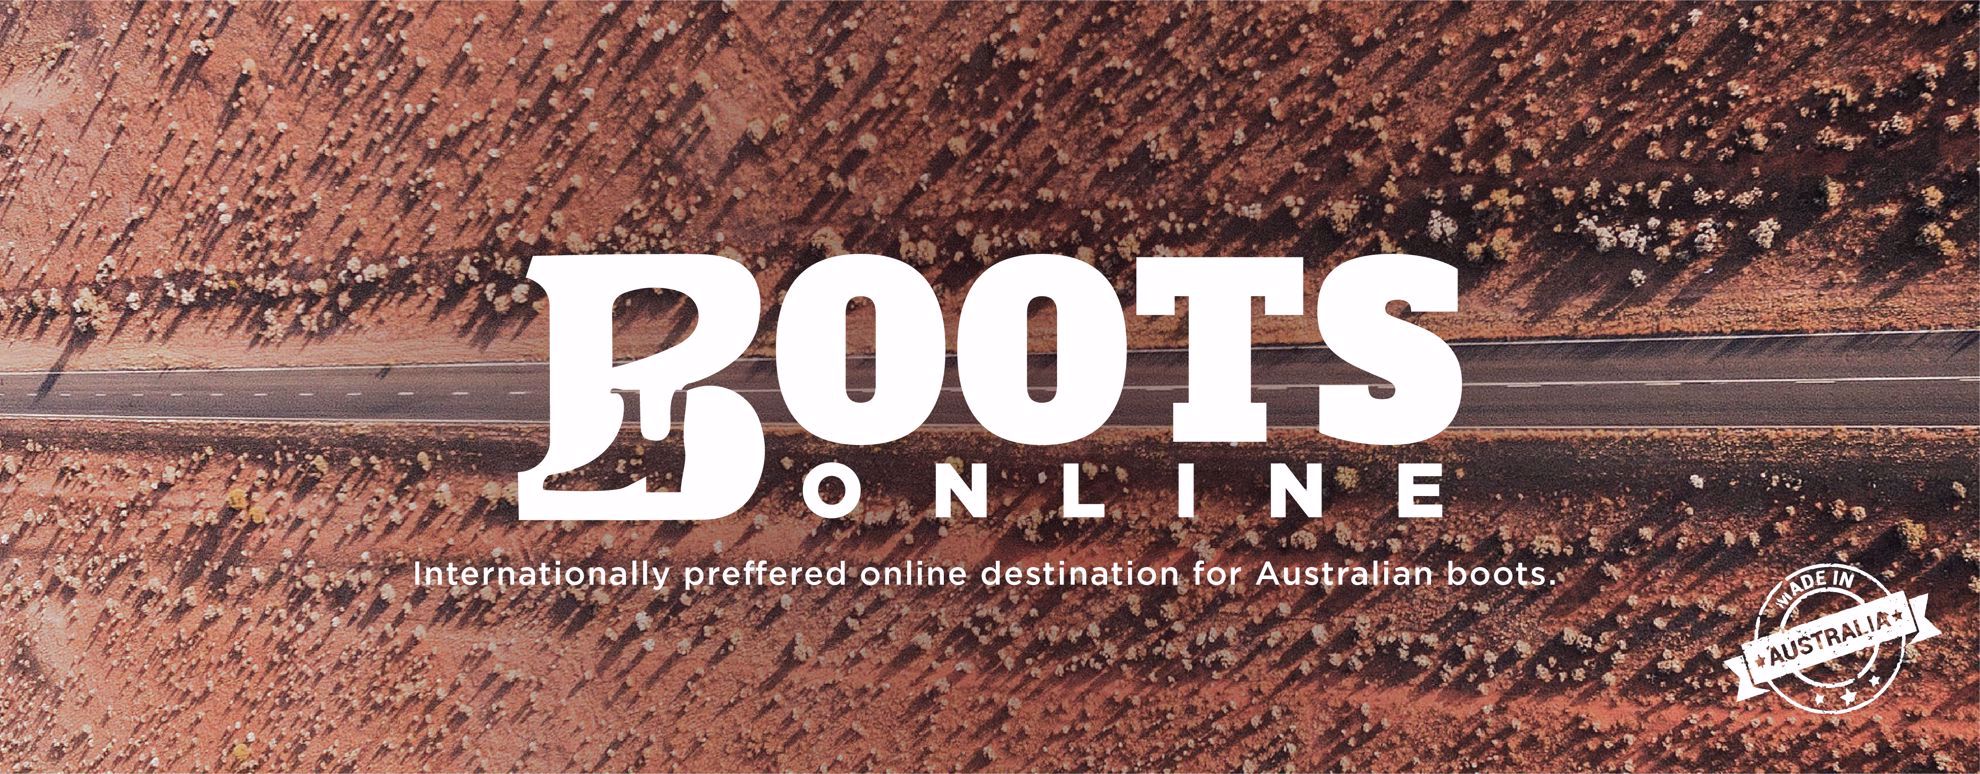 australia boots online store